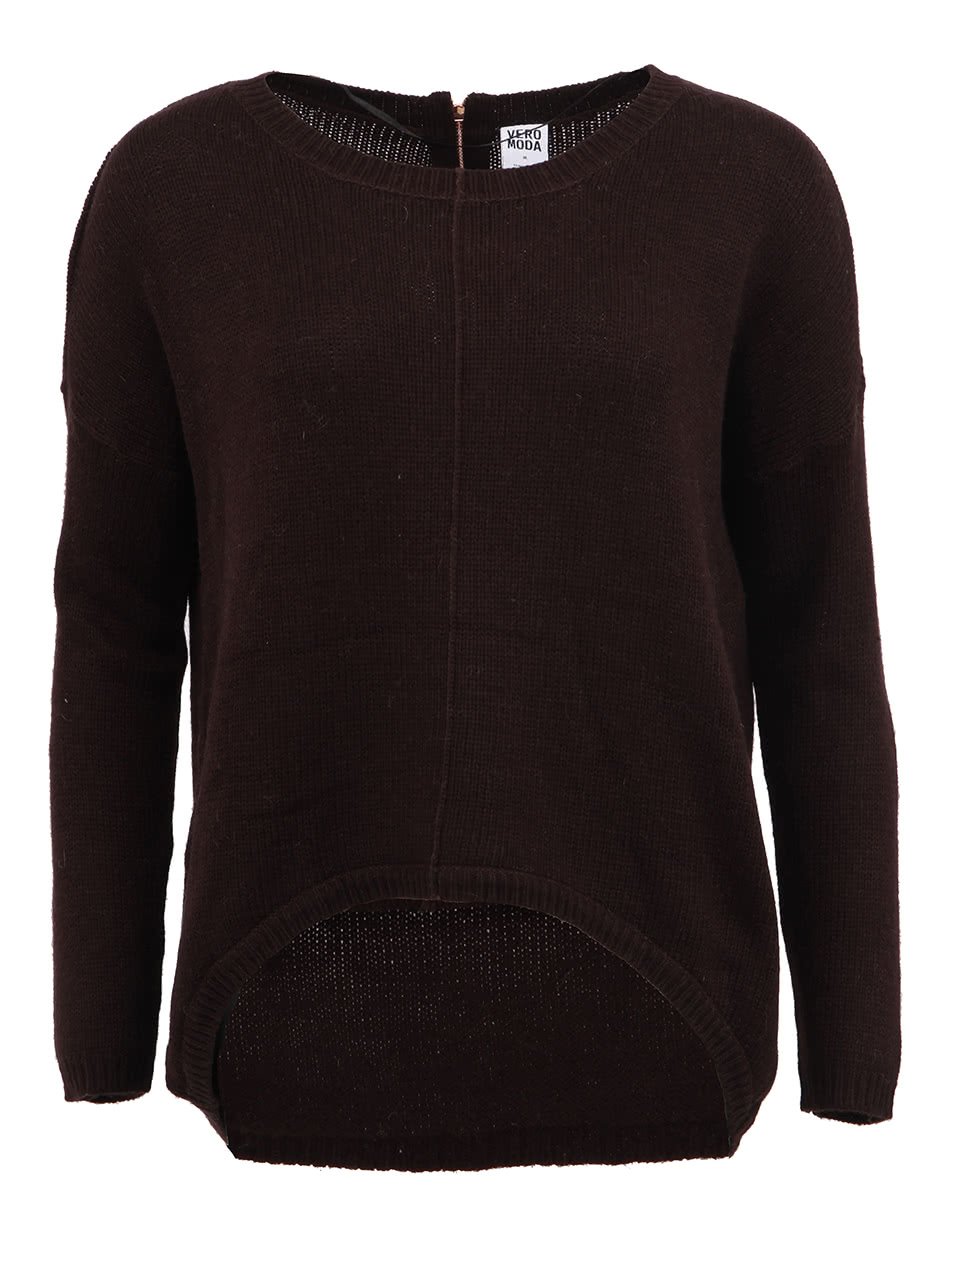 Tmavě hnědý svetr s angorou Vero Moda Janelle